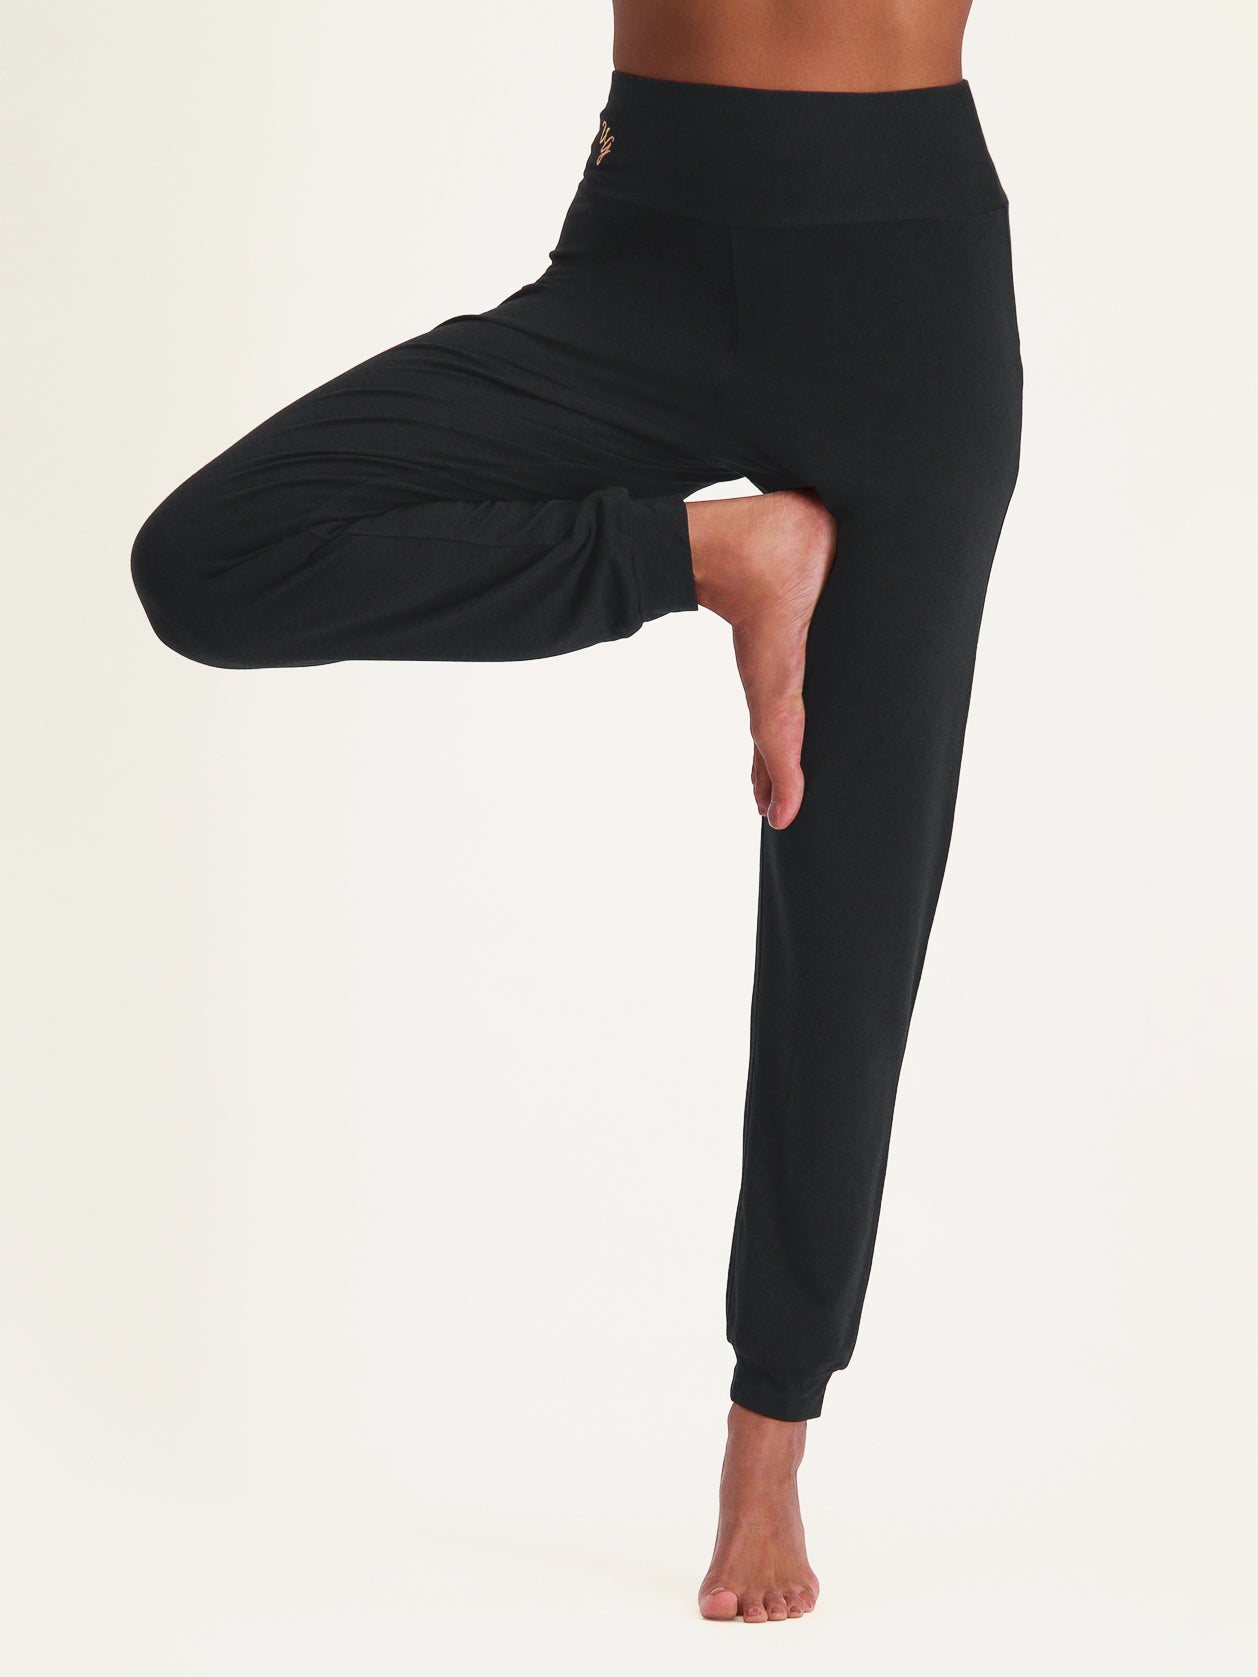 Urban Goddess Ojas Yoga Pants - Urban Black